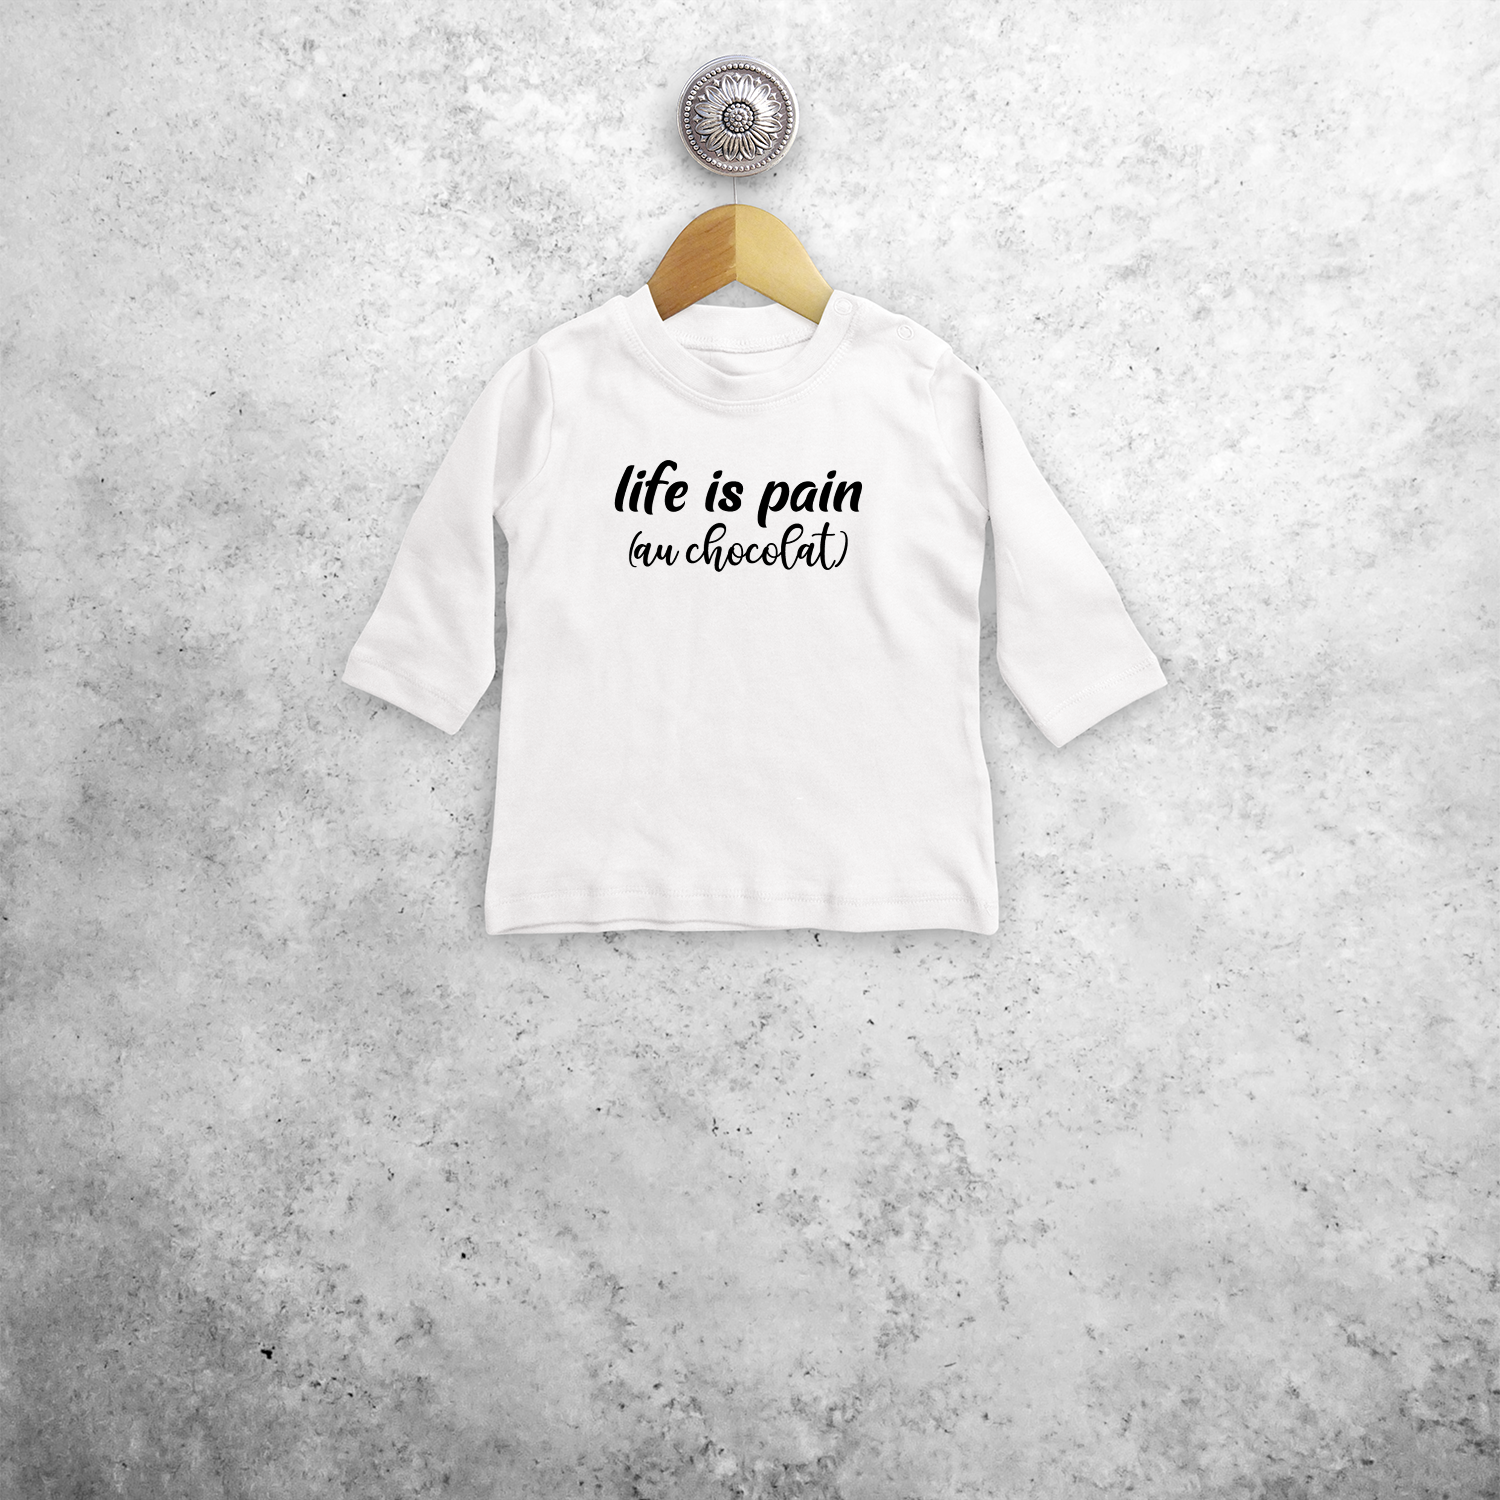 'Life is pain (au chocolat)' baby longsleeve shirt